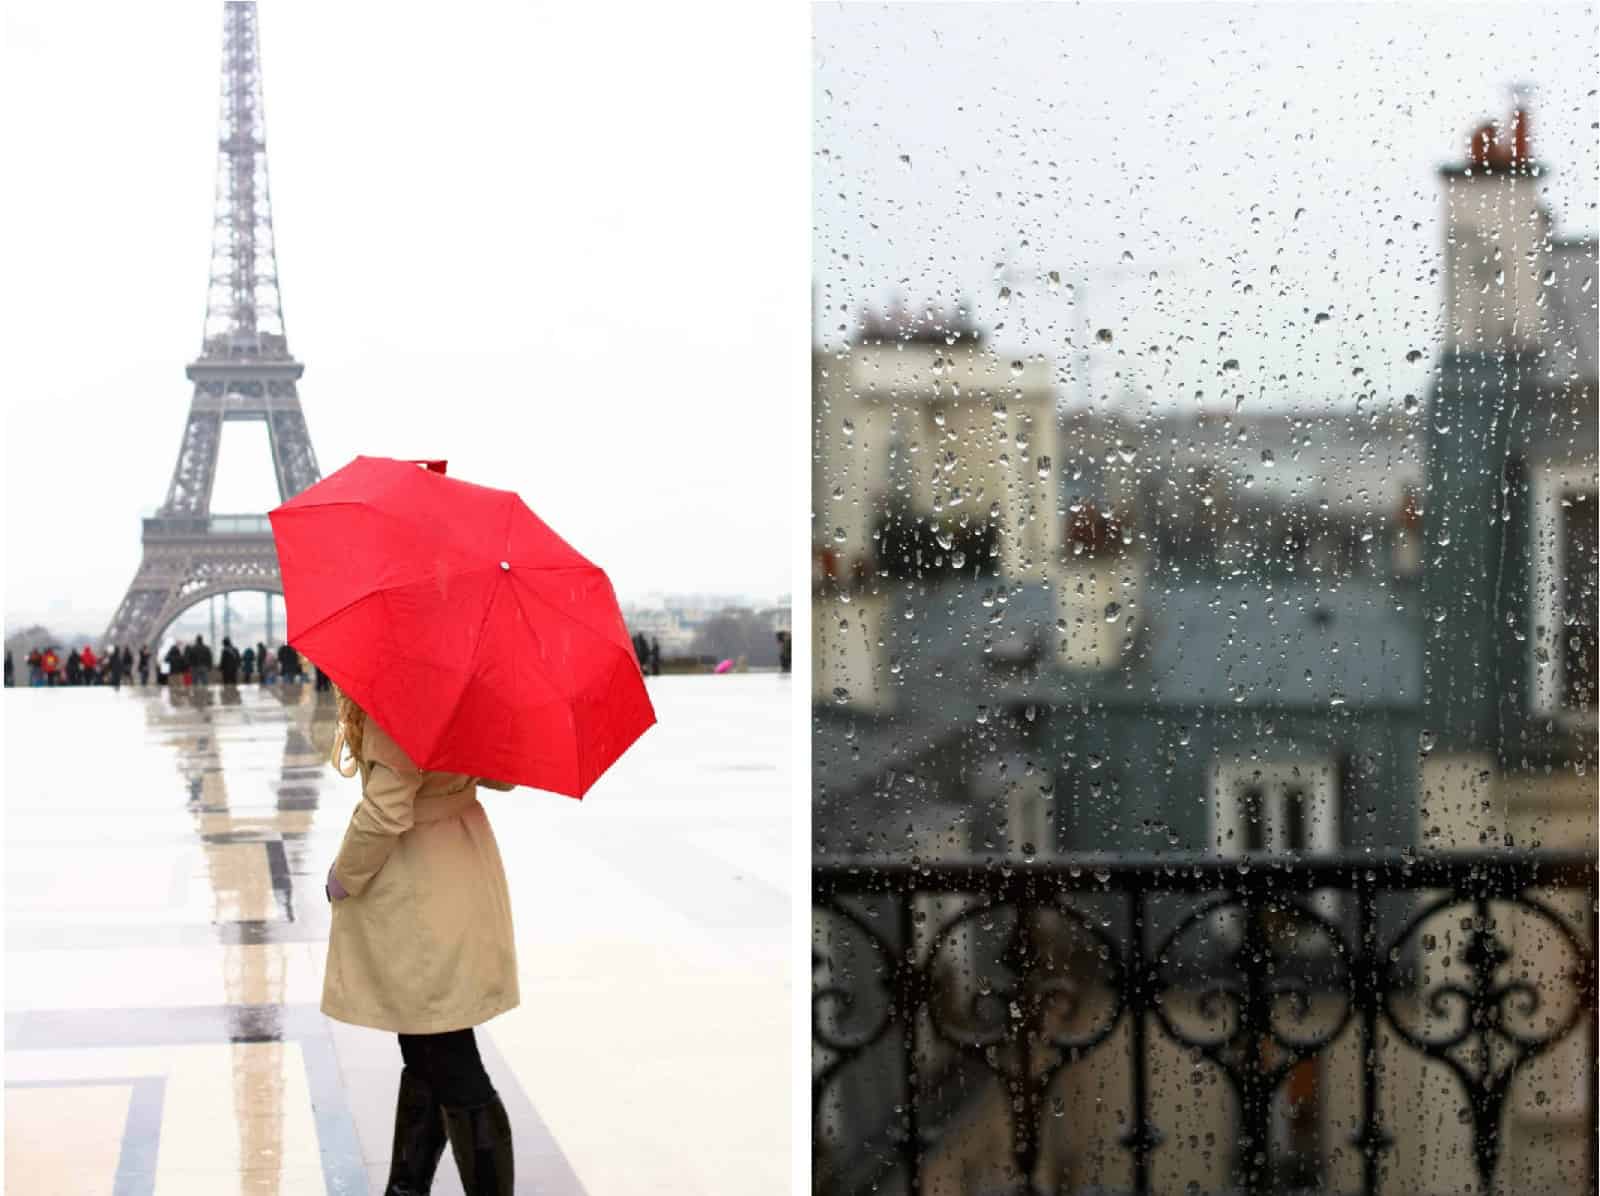 HiP Paris blog. Paris beneath a veil of rain. Three essentials for Parisian rainy days: a cute umbrella, proper footwear, and a cozy place to watch the rain fall over the rooftops.